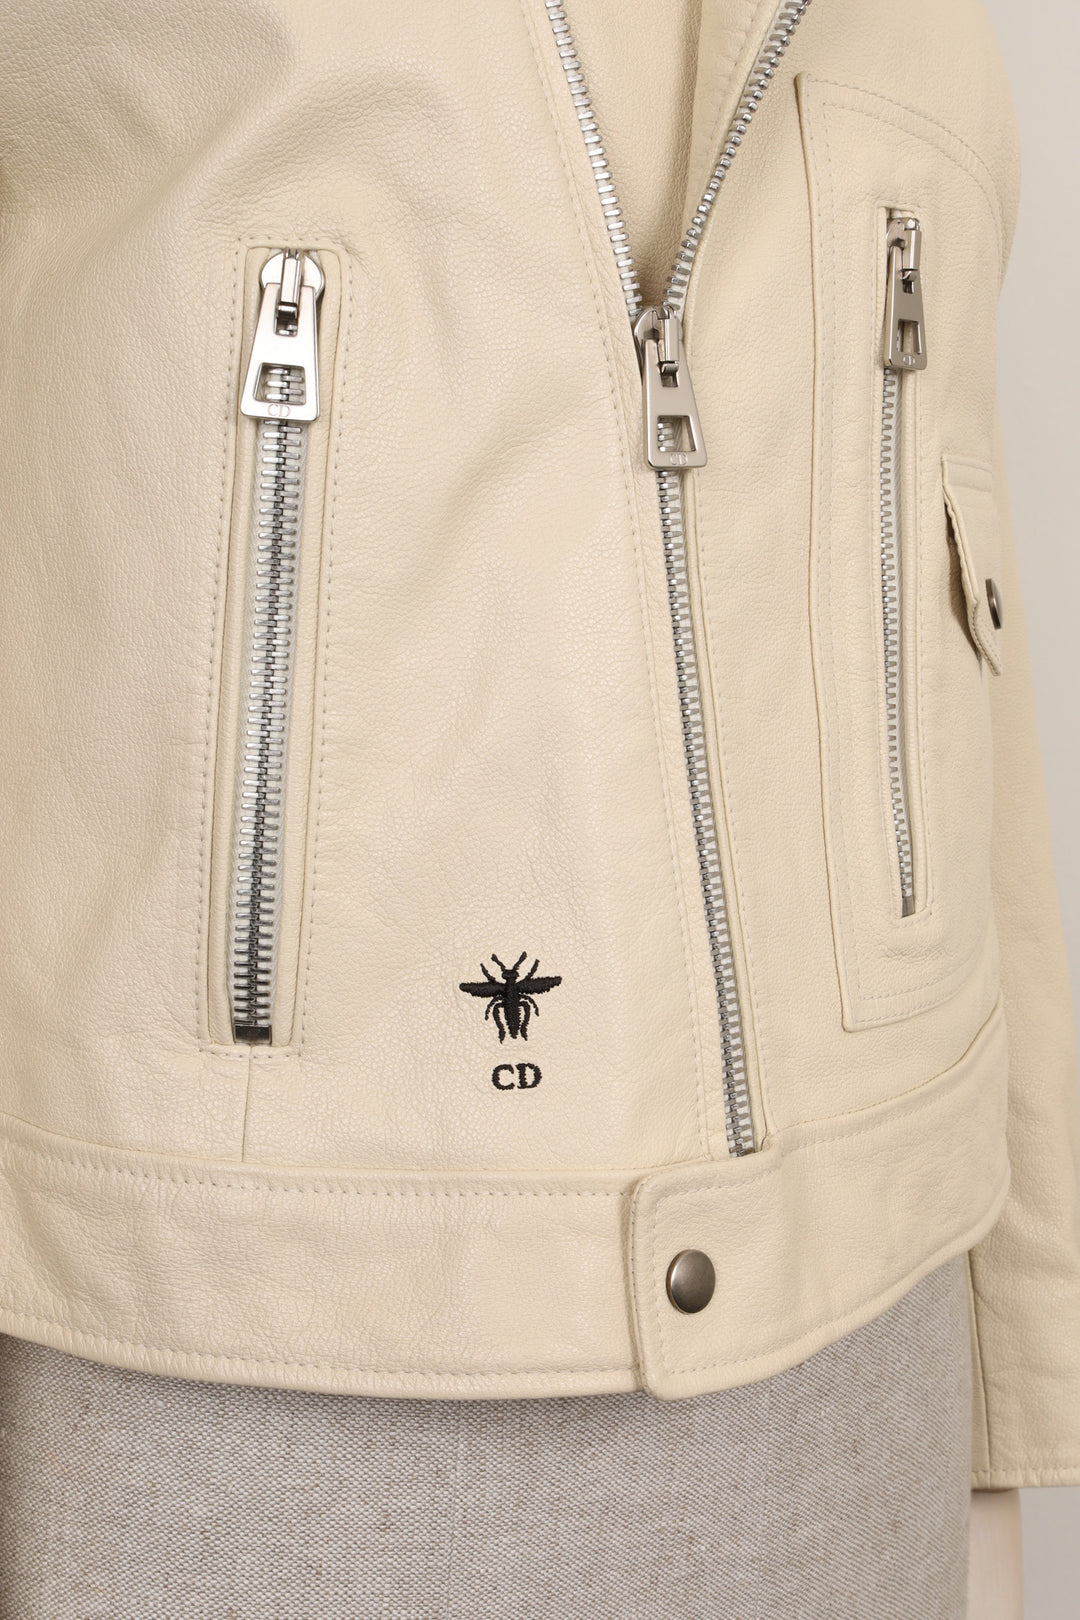 CHRISTIAN DIOR Leather Jacket Printed Back Créme